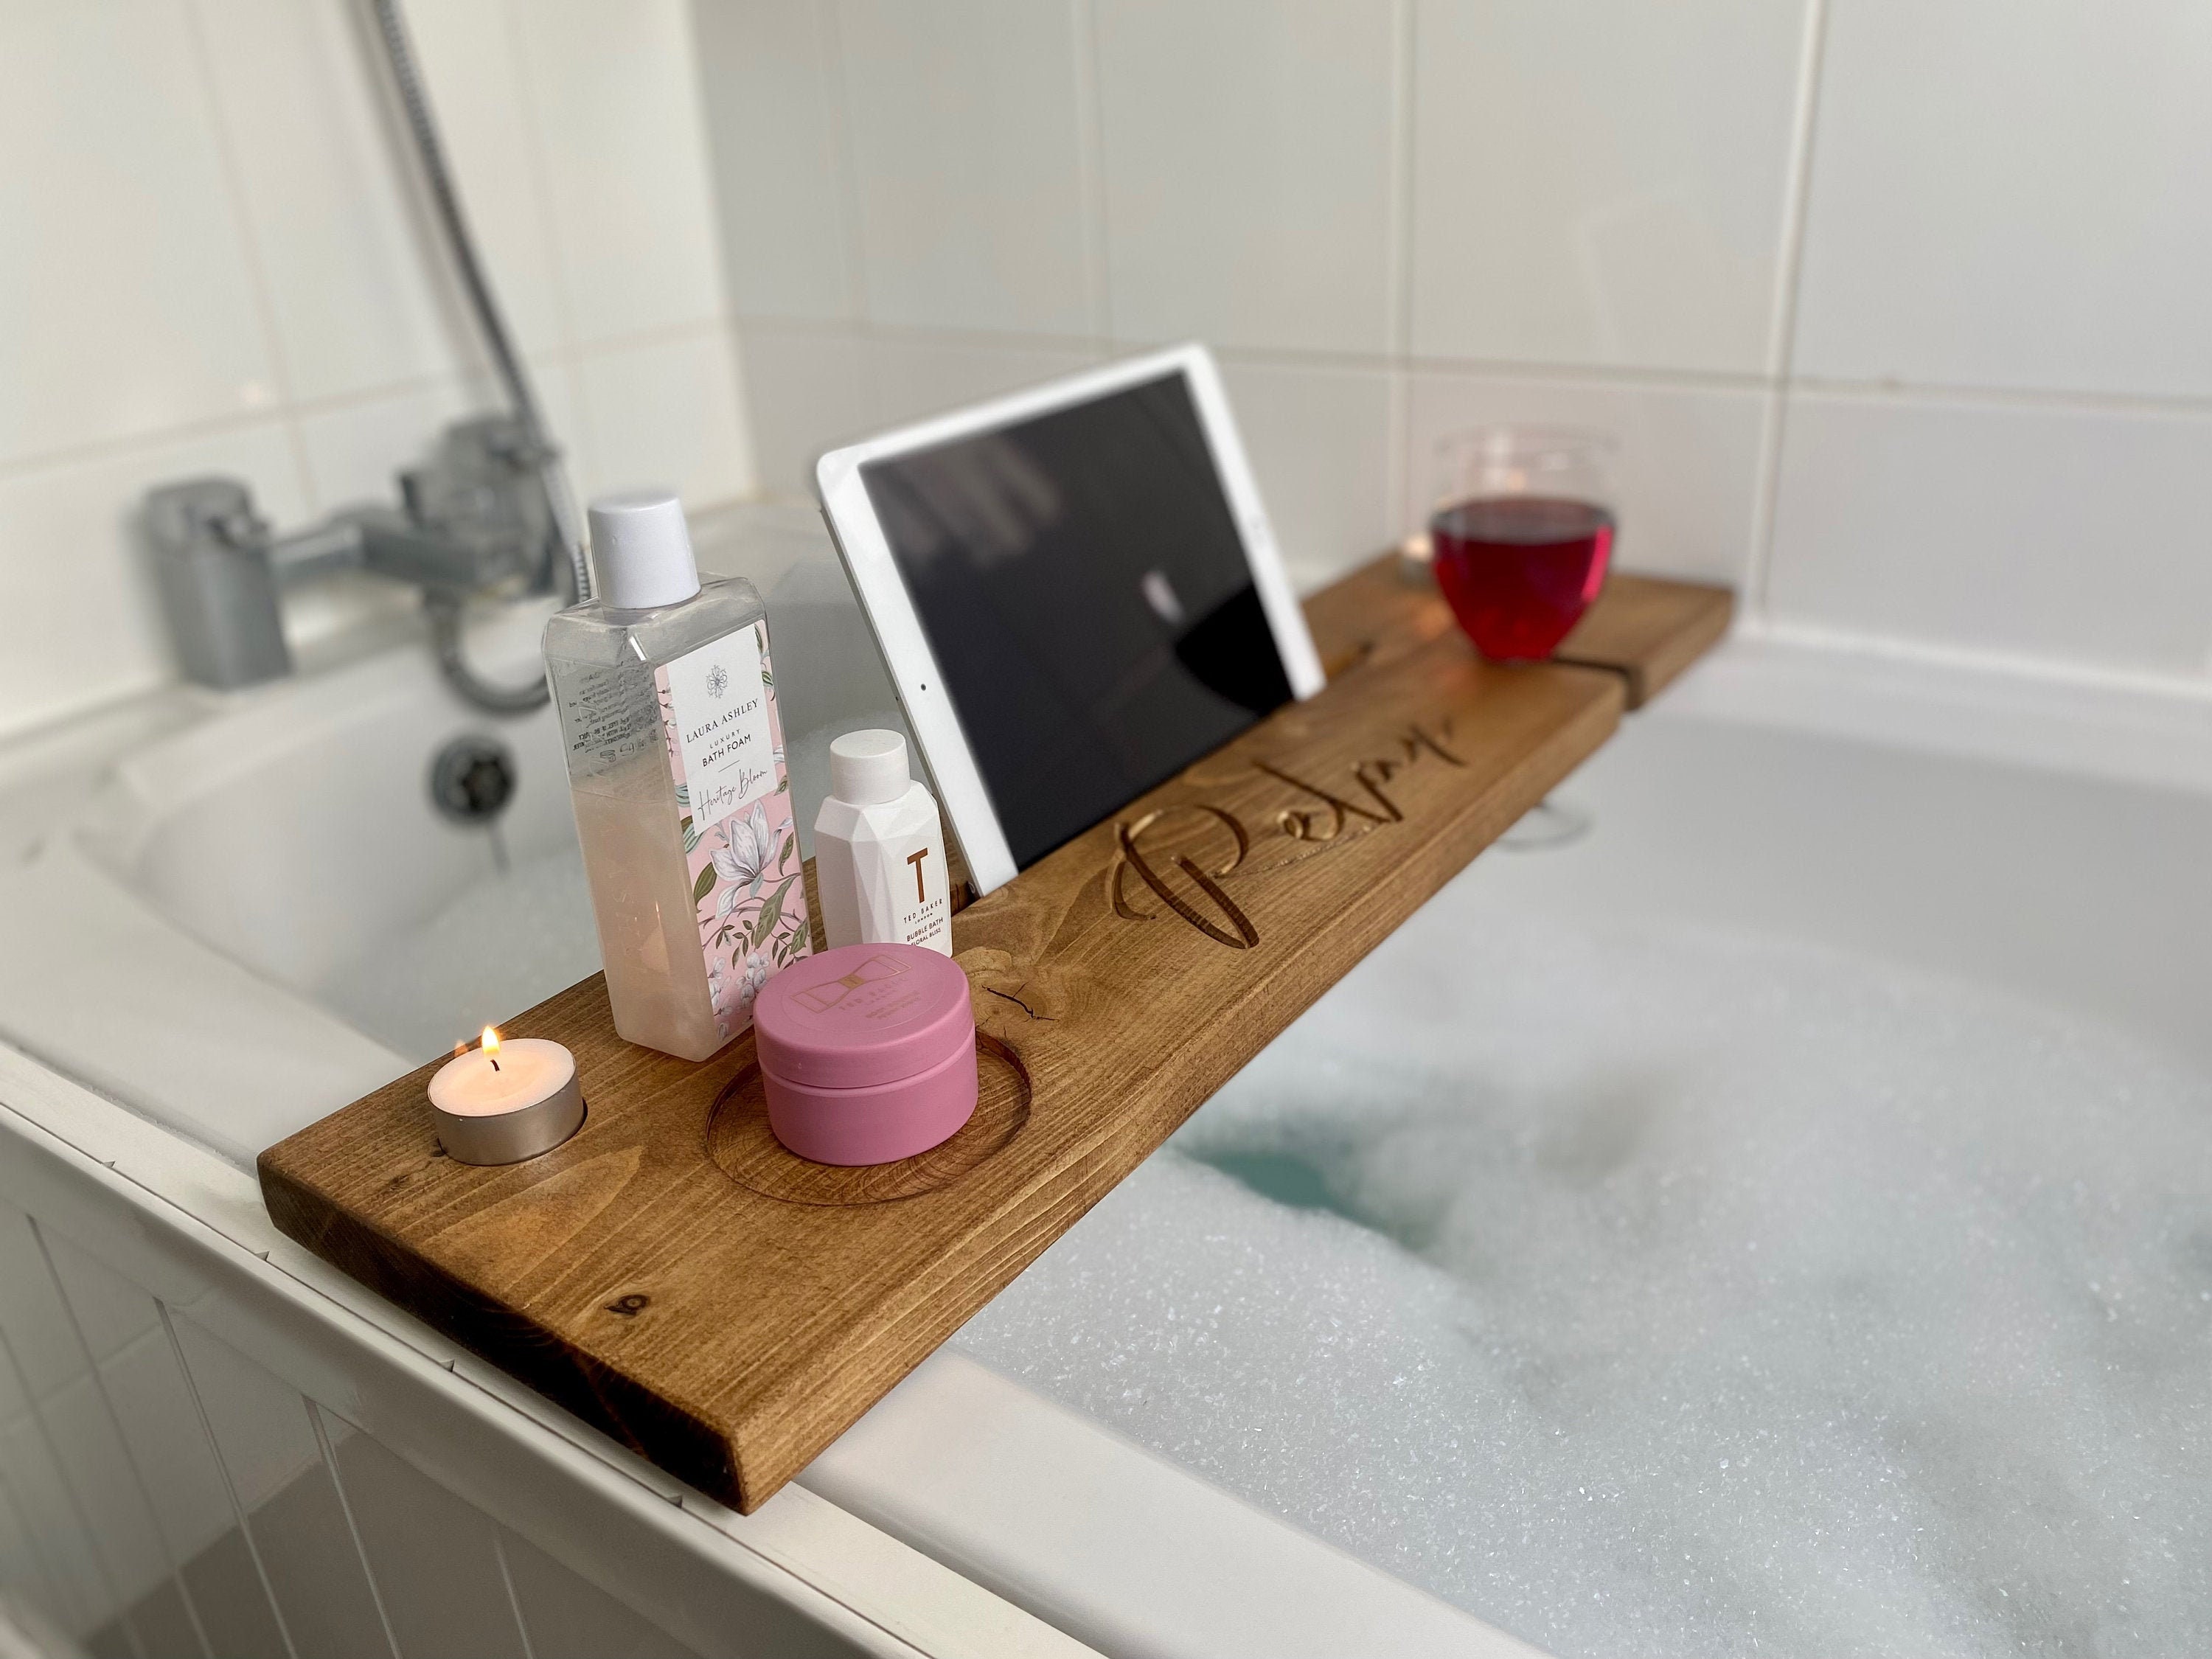 Expandable Bamboo Bath Caddy Book iPhone Wineglass Holder Over Bathtub Rack